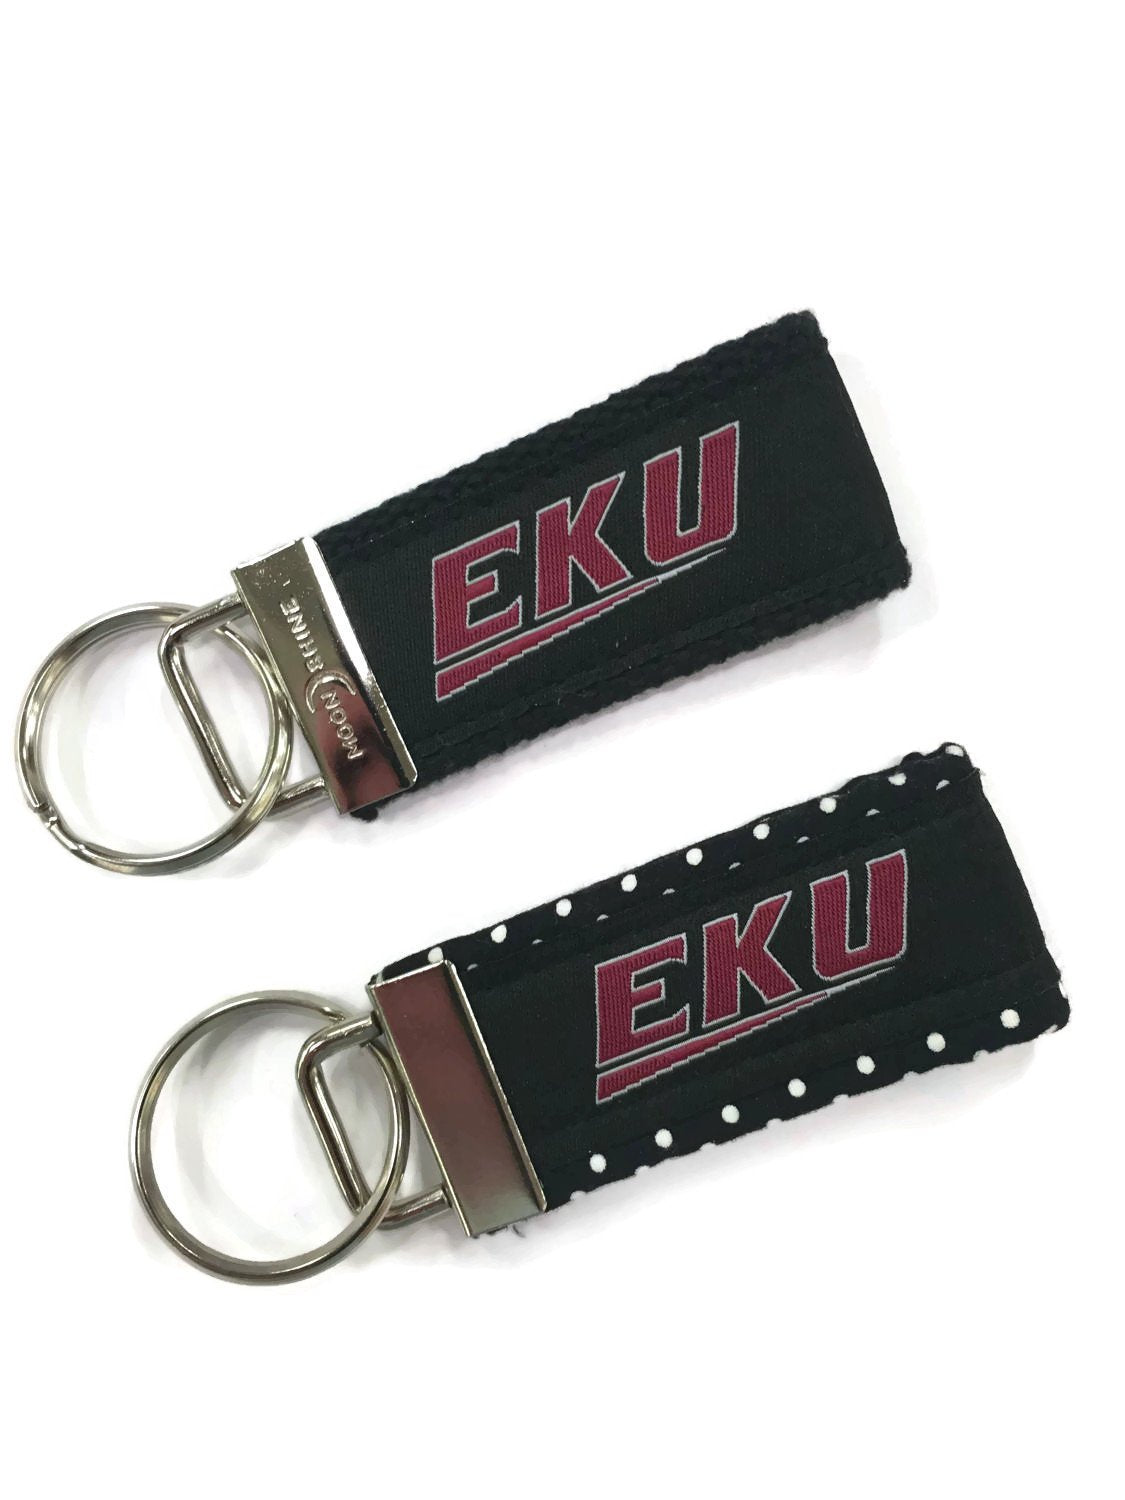 Eastern Kentucky University web key chains